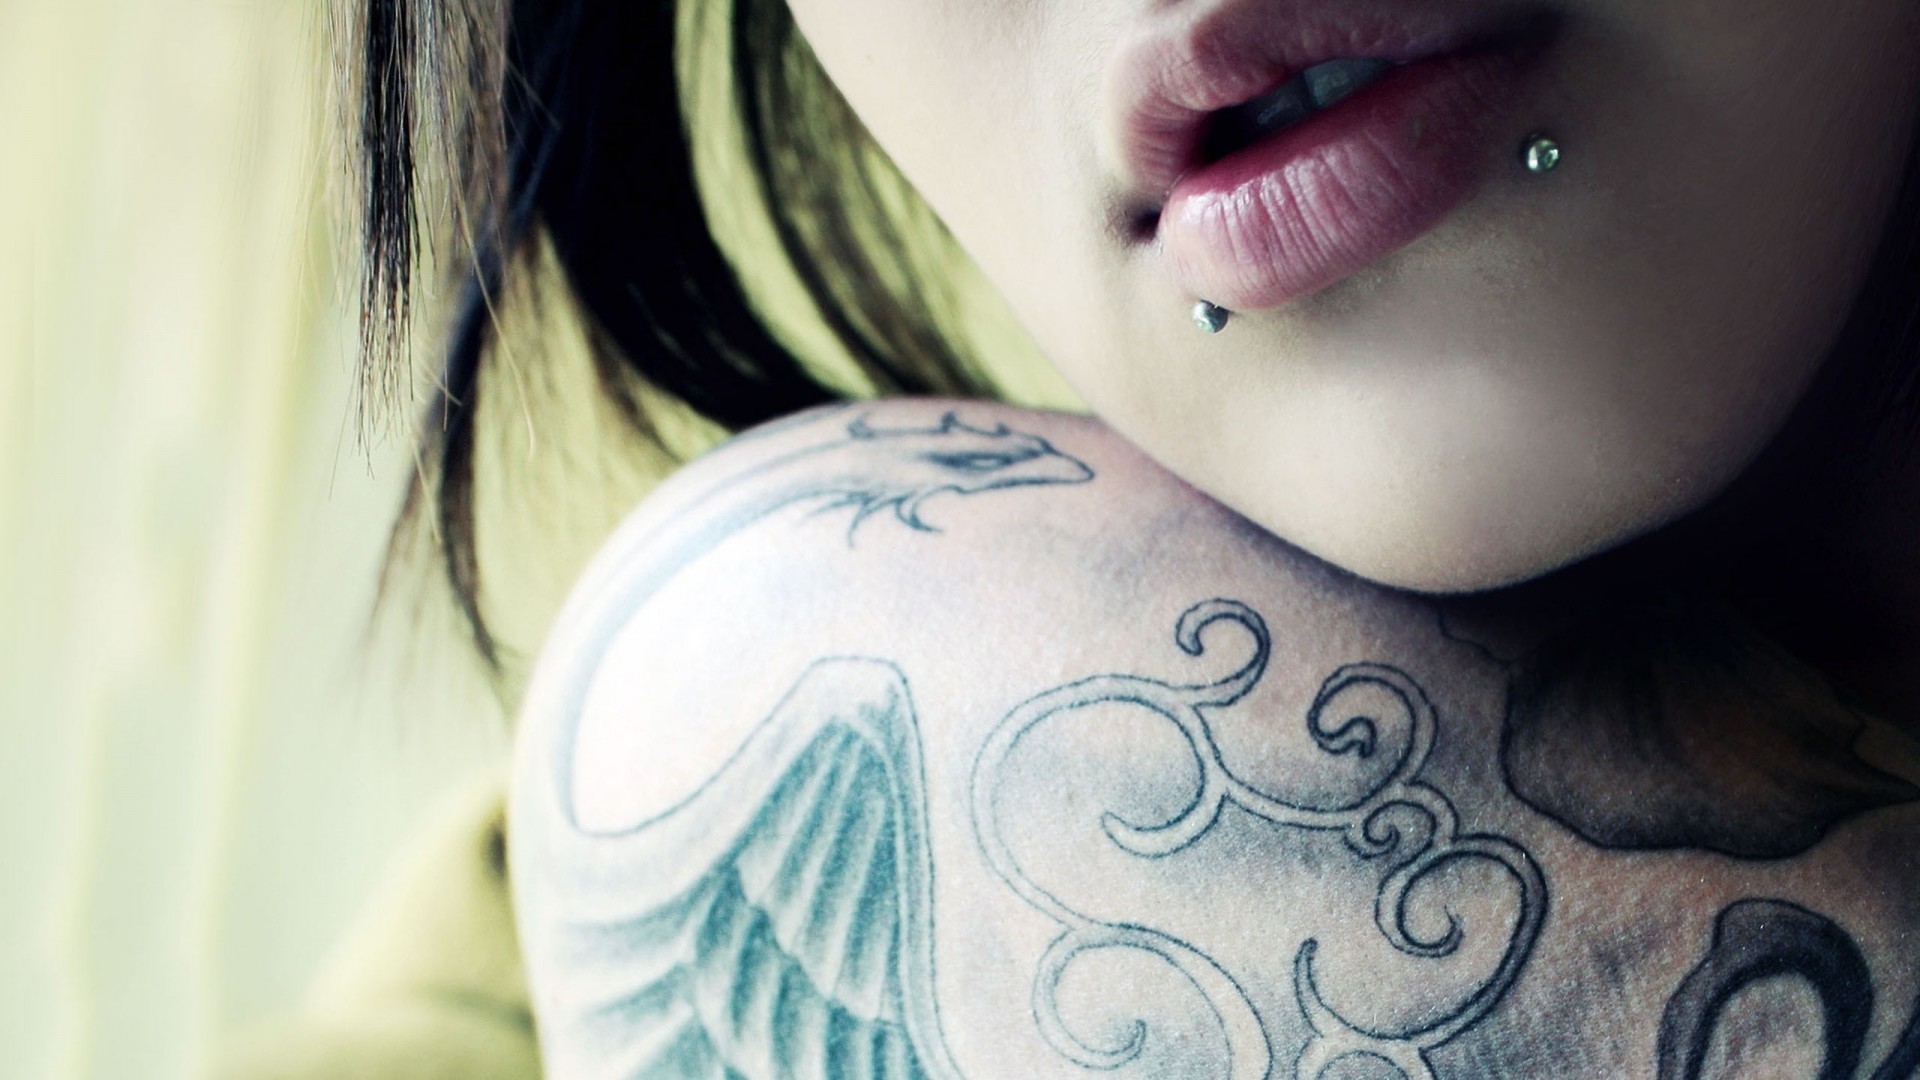 50+ Free Tattooed Woman & Tattoo Images - Pixabay